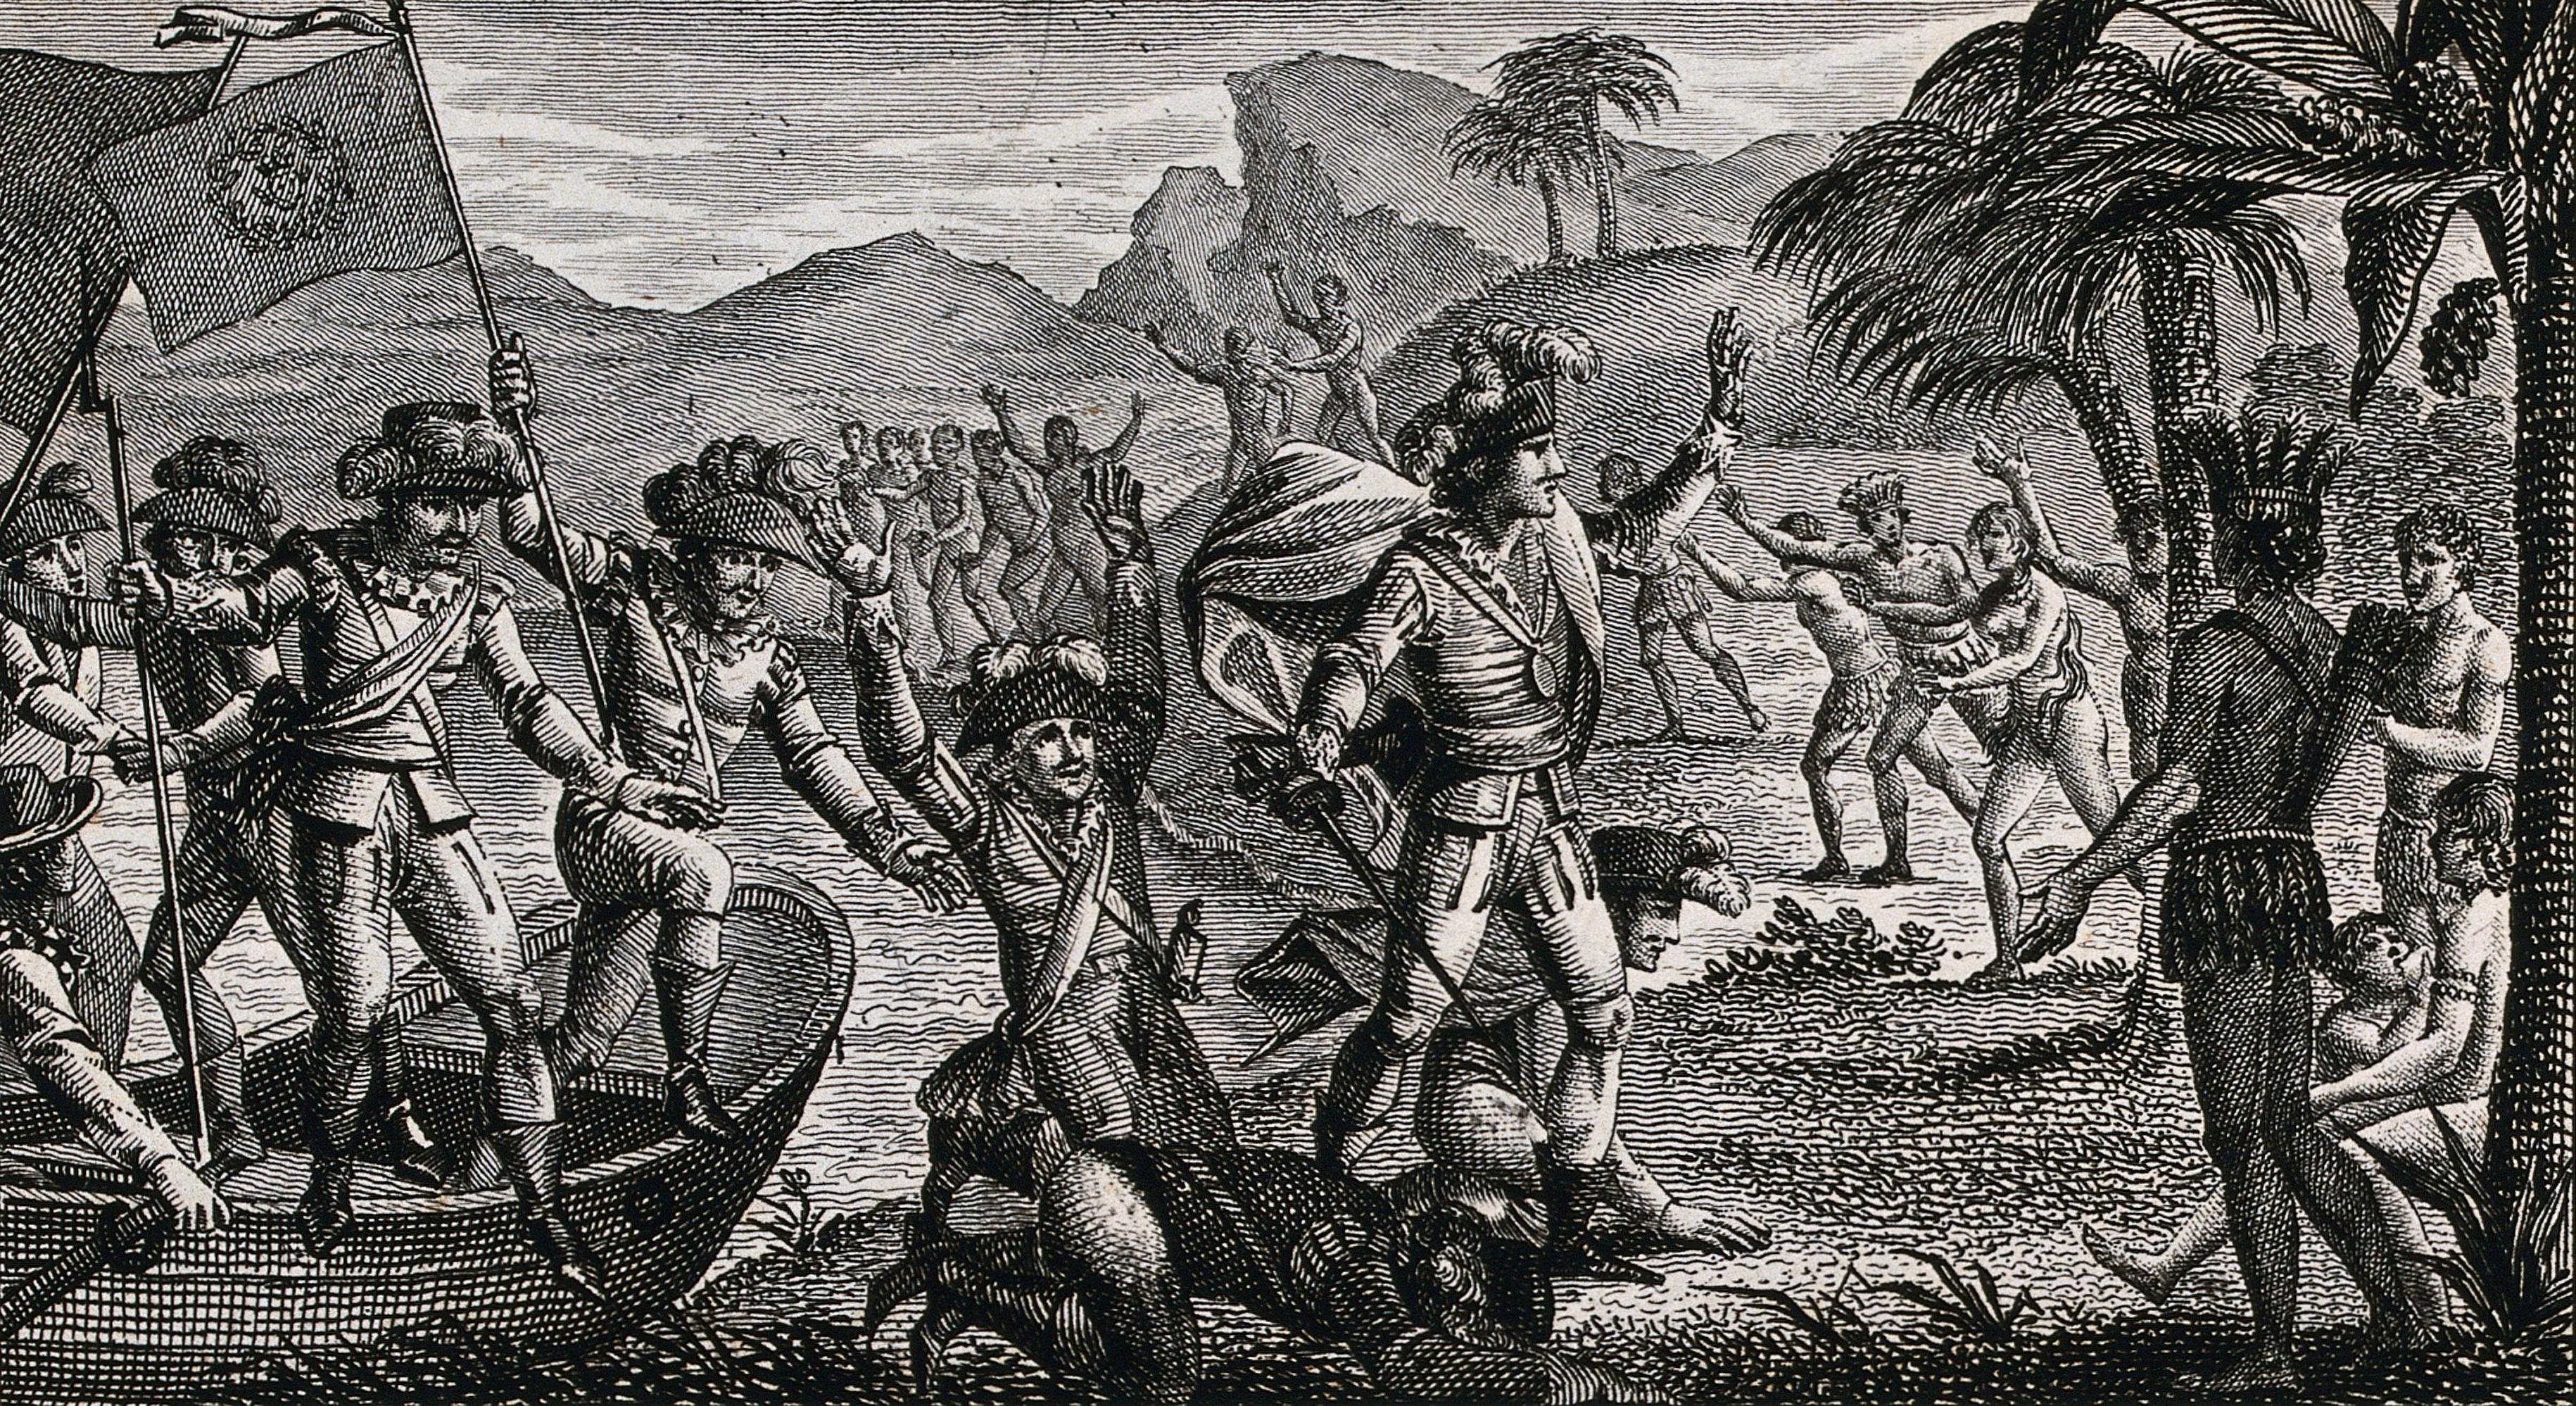 Первый европеец посетивший карибские острова. 1492 Колумб. Испанские экспедиции Христофора Колумба.